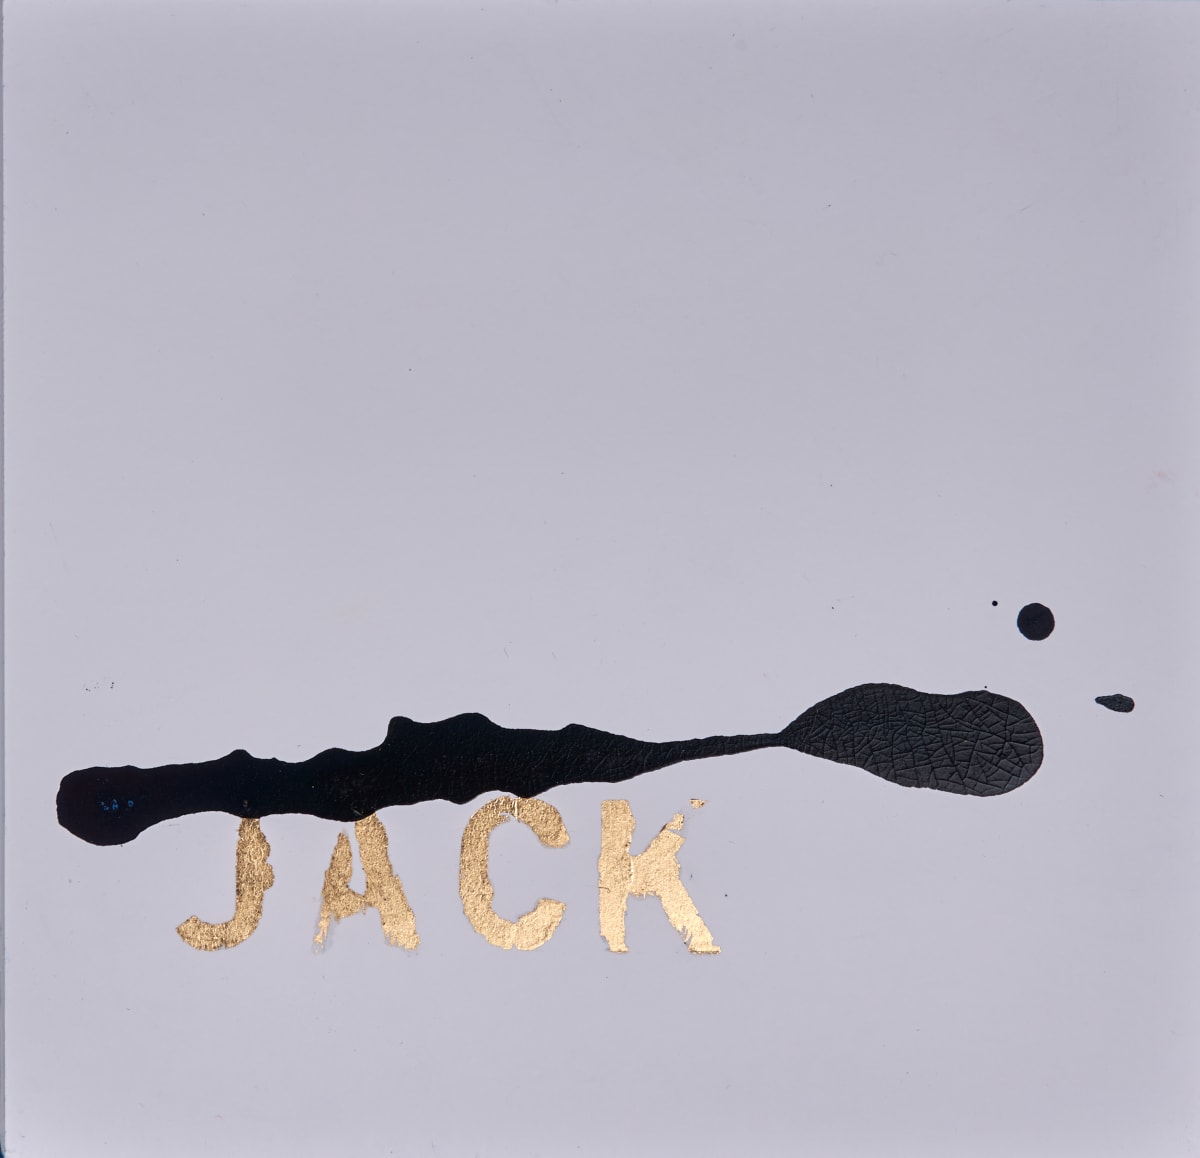 "Jack" - New Port Richey - Florida by Ghislain Pfersdorff 